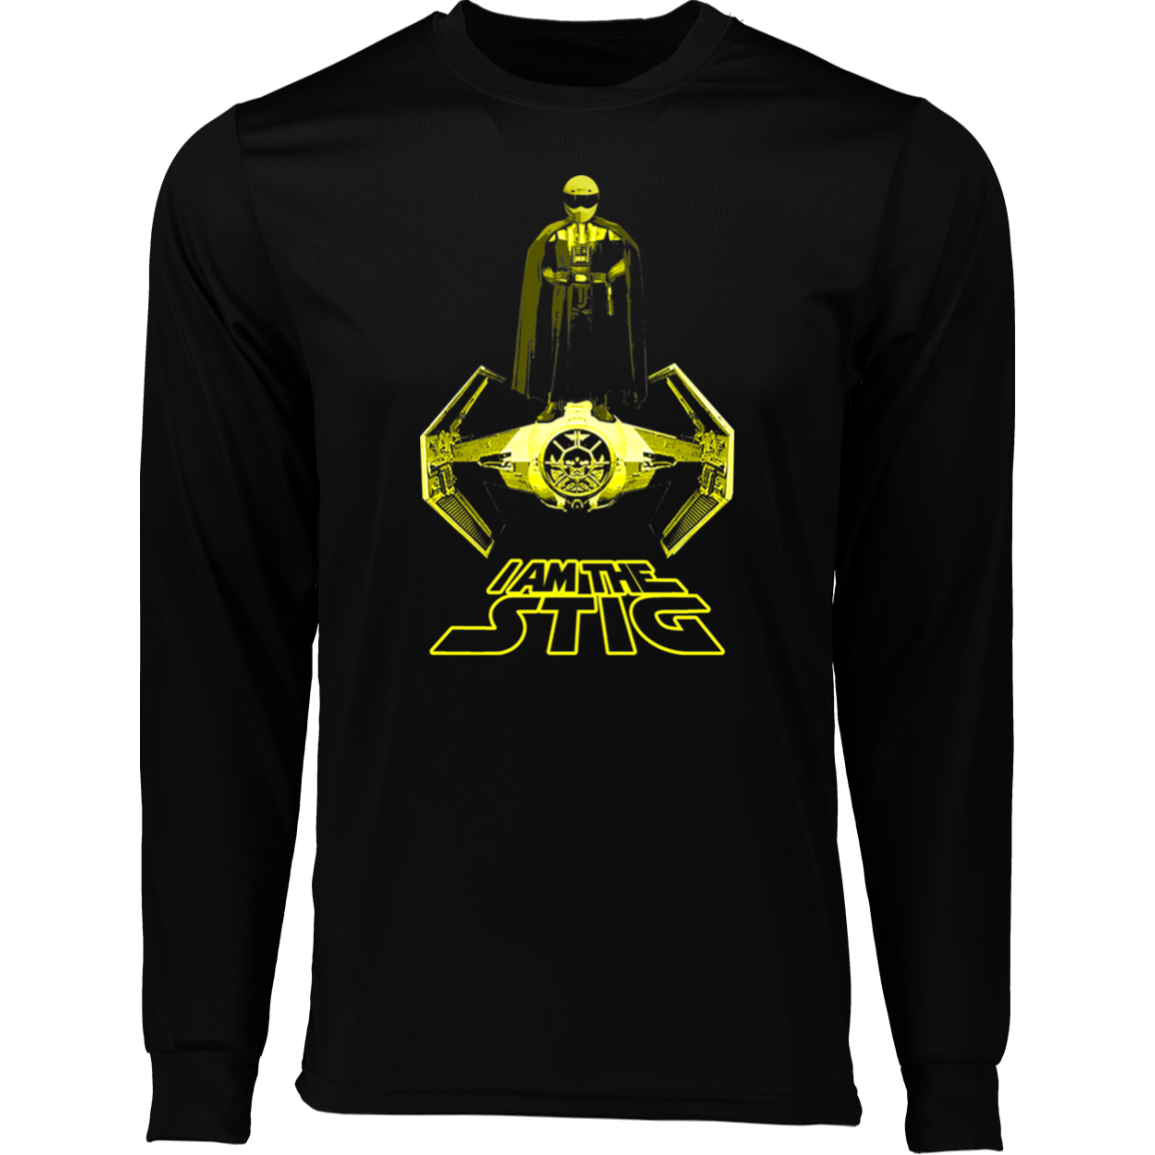 ArtichokeUSA Custom Design. I am the Stig. Vader/ The Stig Fan Art. Long Sleeve Moisture-Wicking Tee